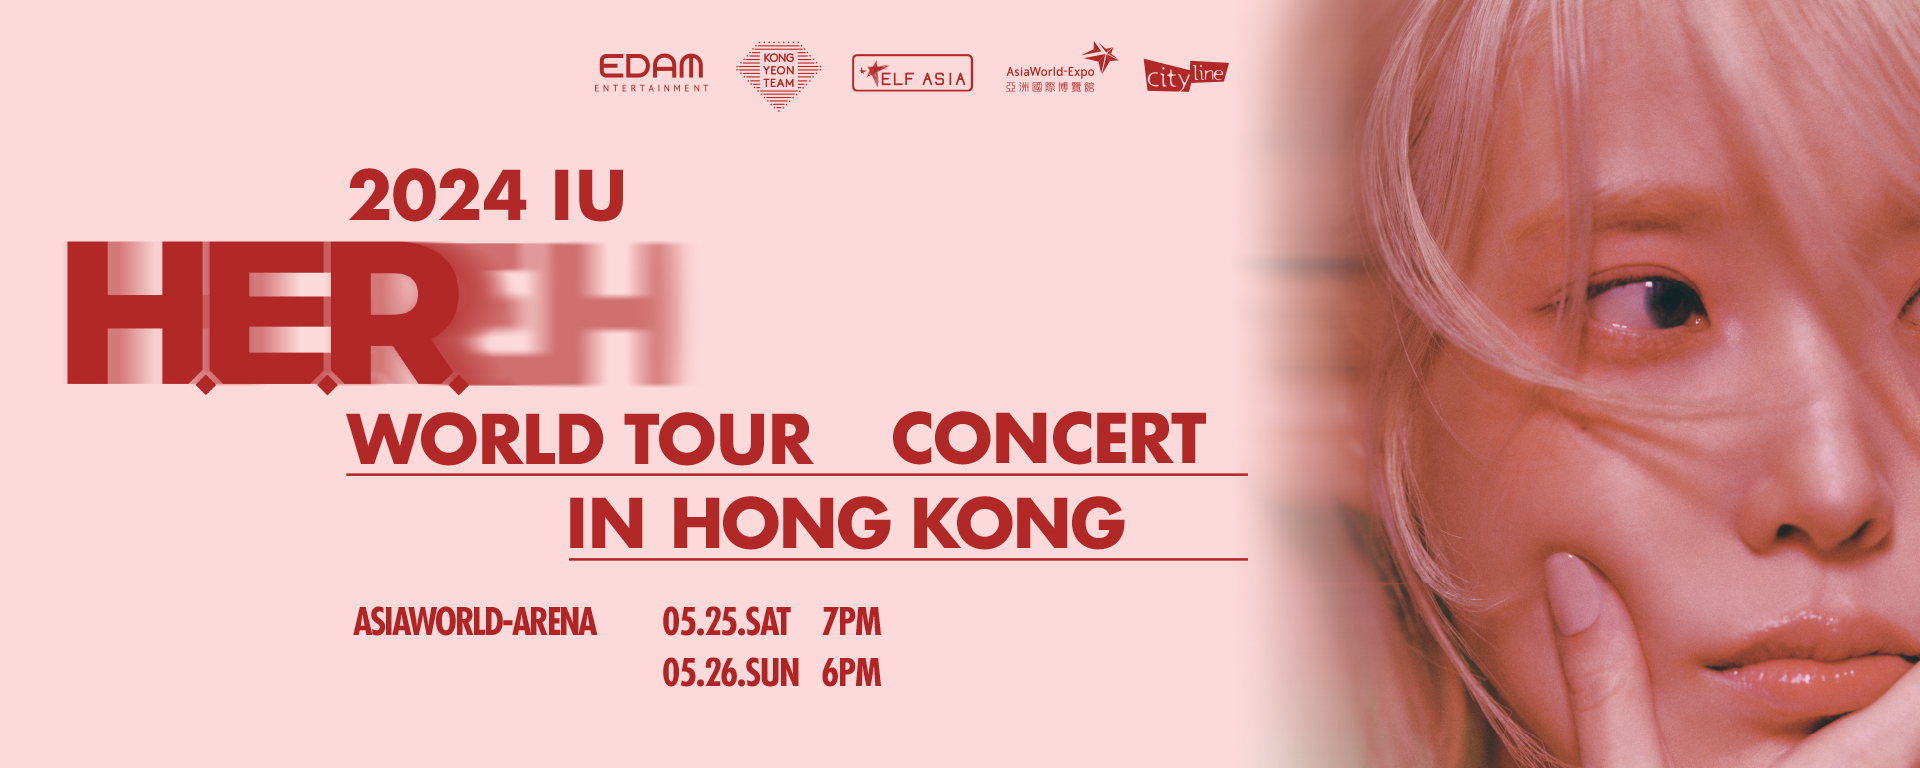 2024 IU H.E.R. WORLD TOUR CONCERT IN HONG KONG